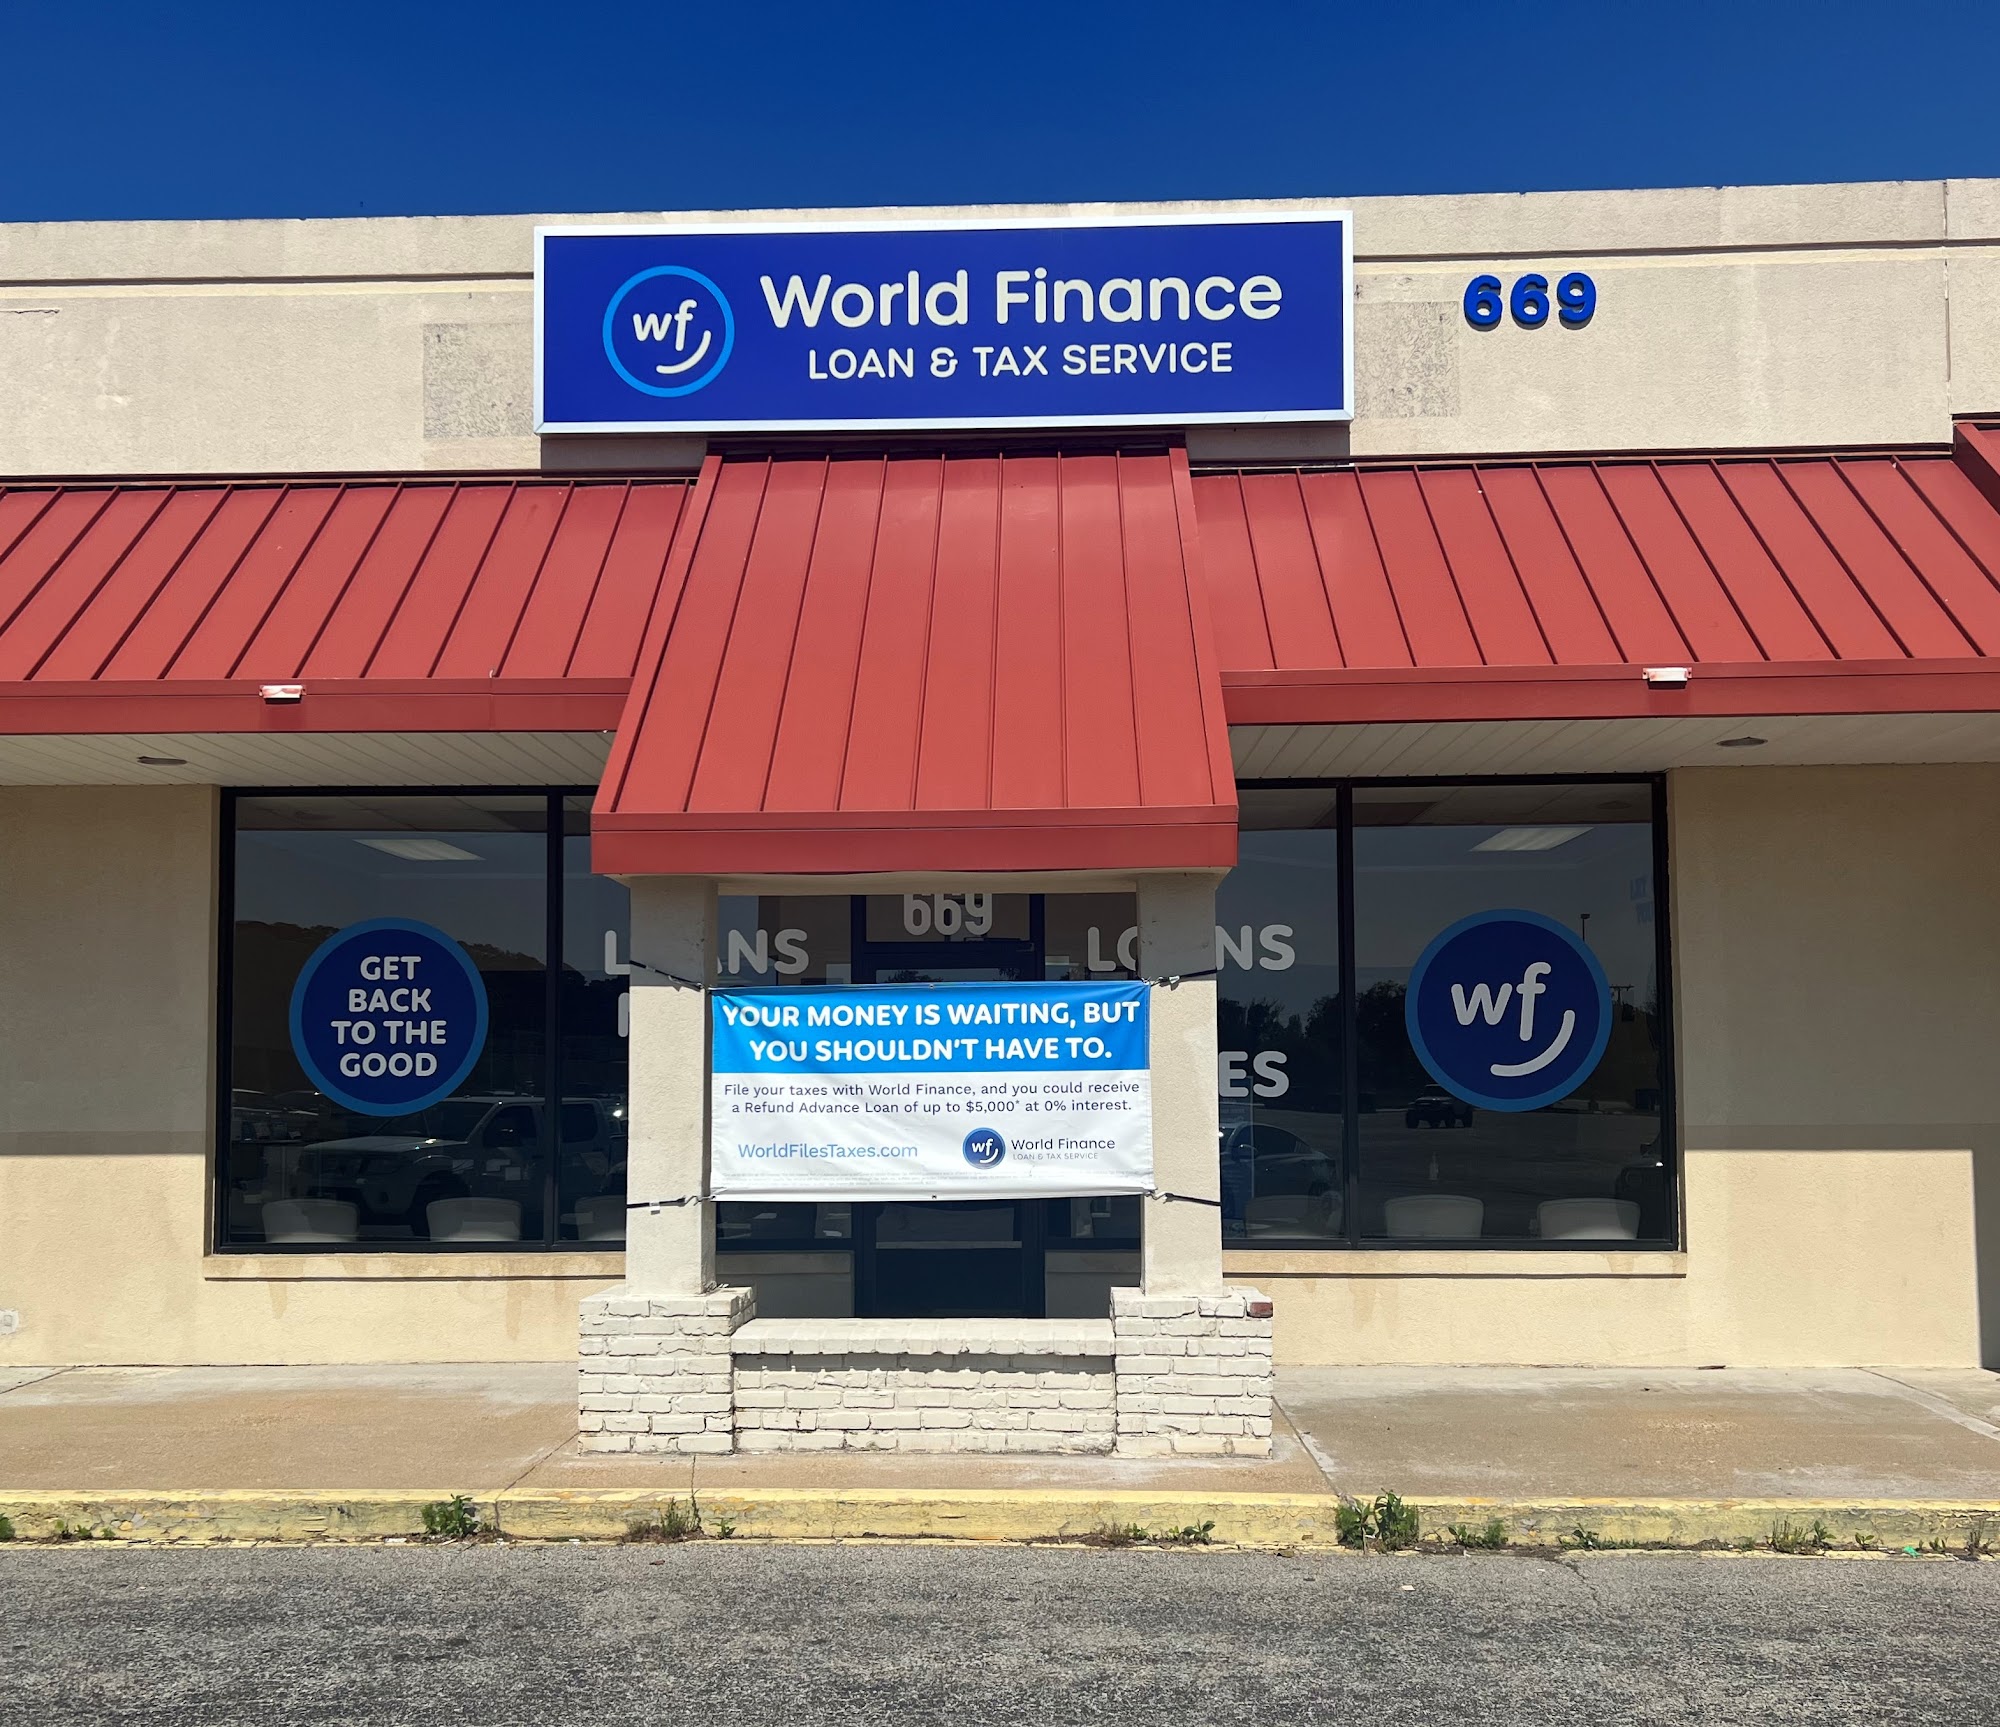 World Finance 669 W Church St, Lexington Tennessee 38351